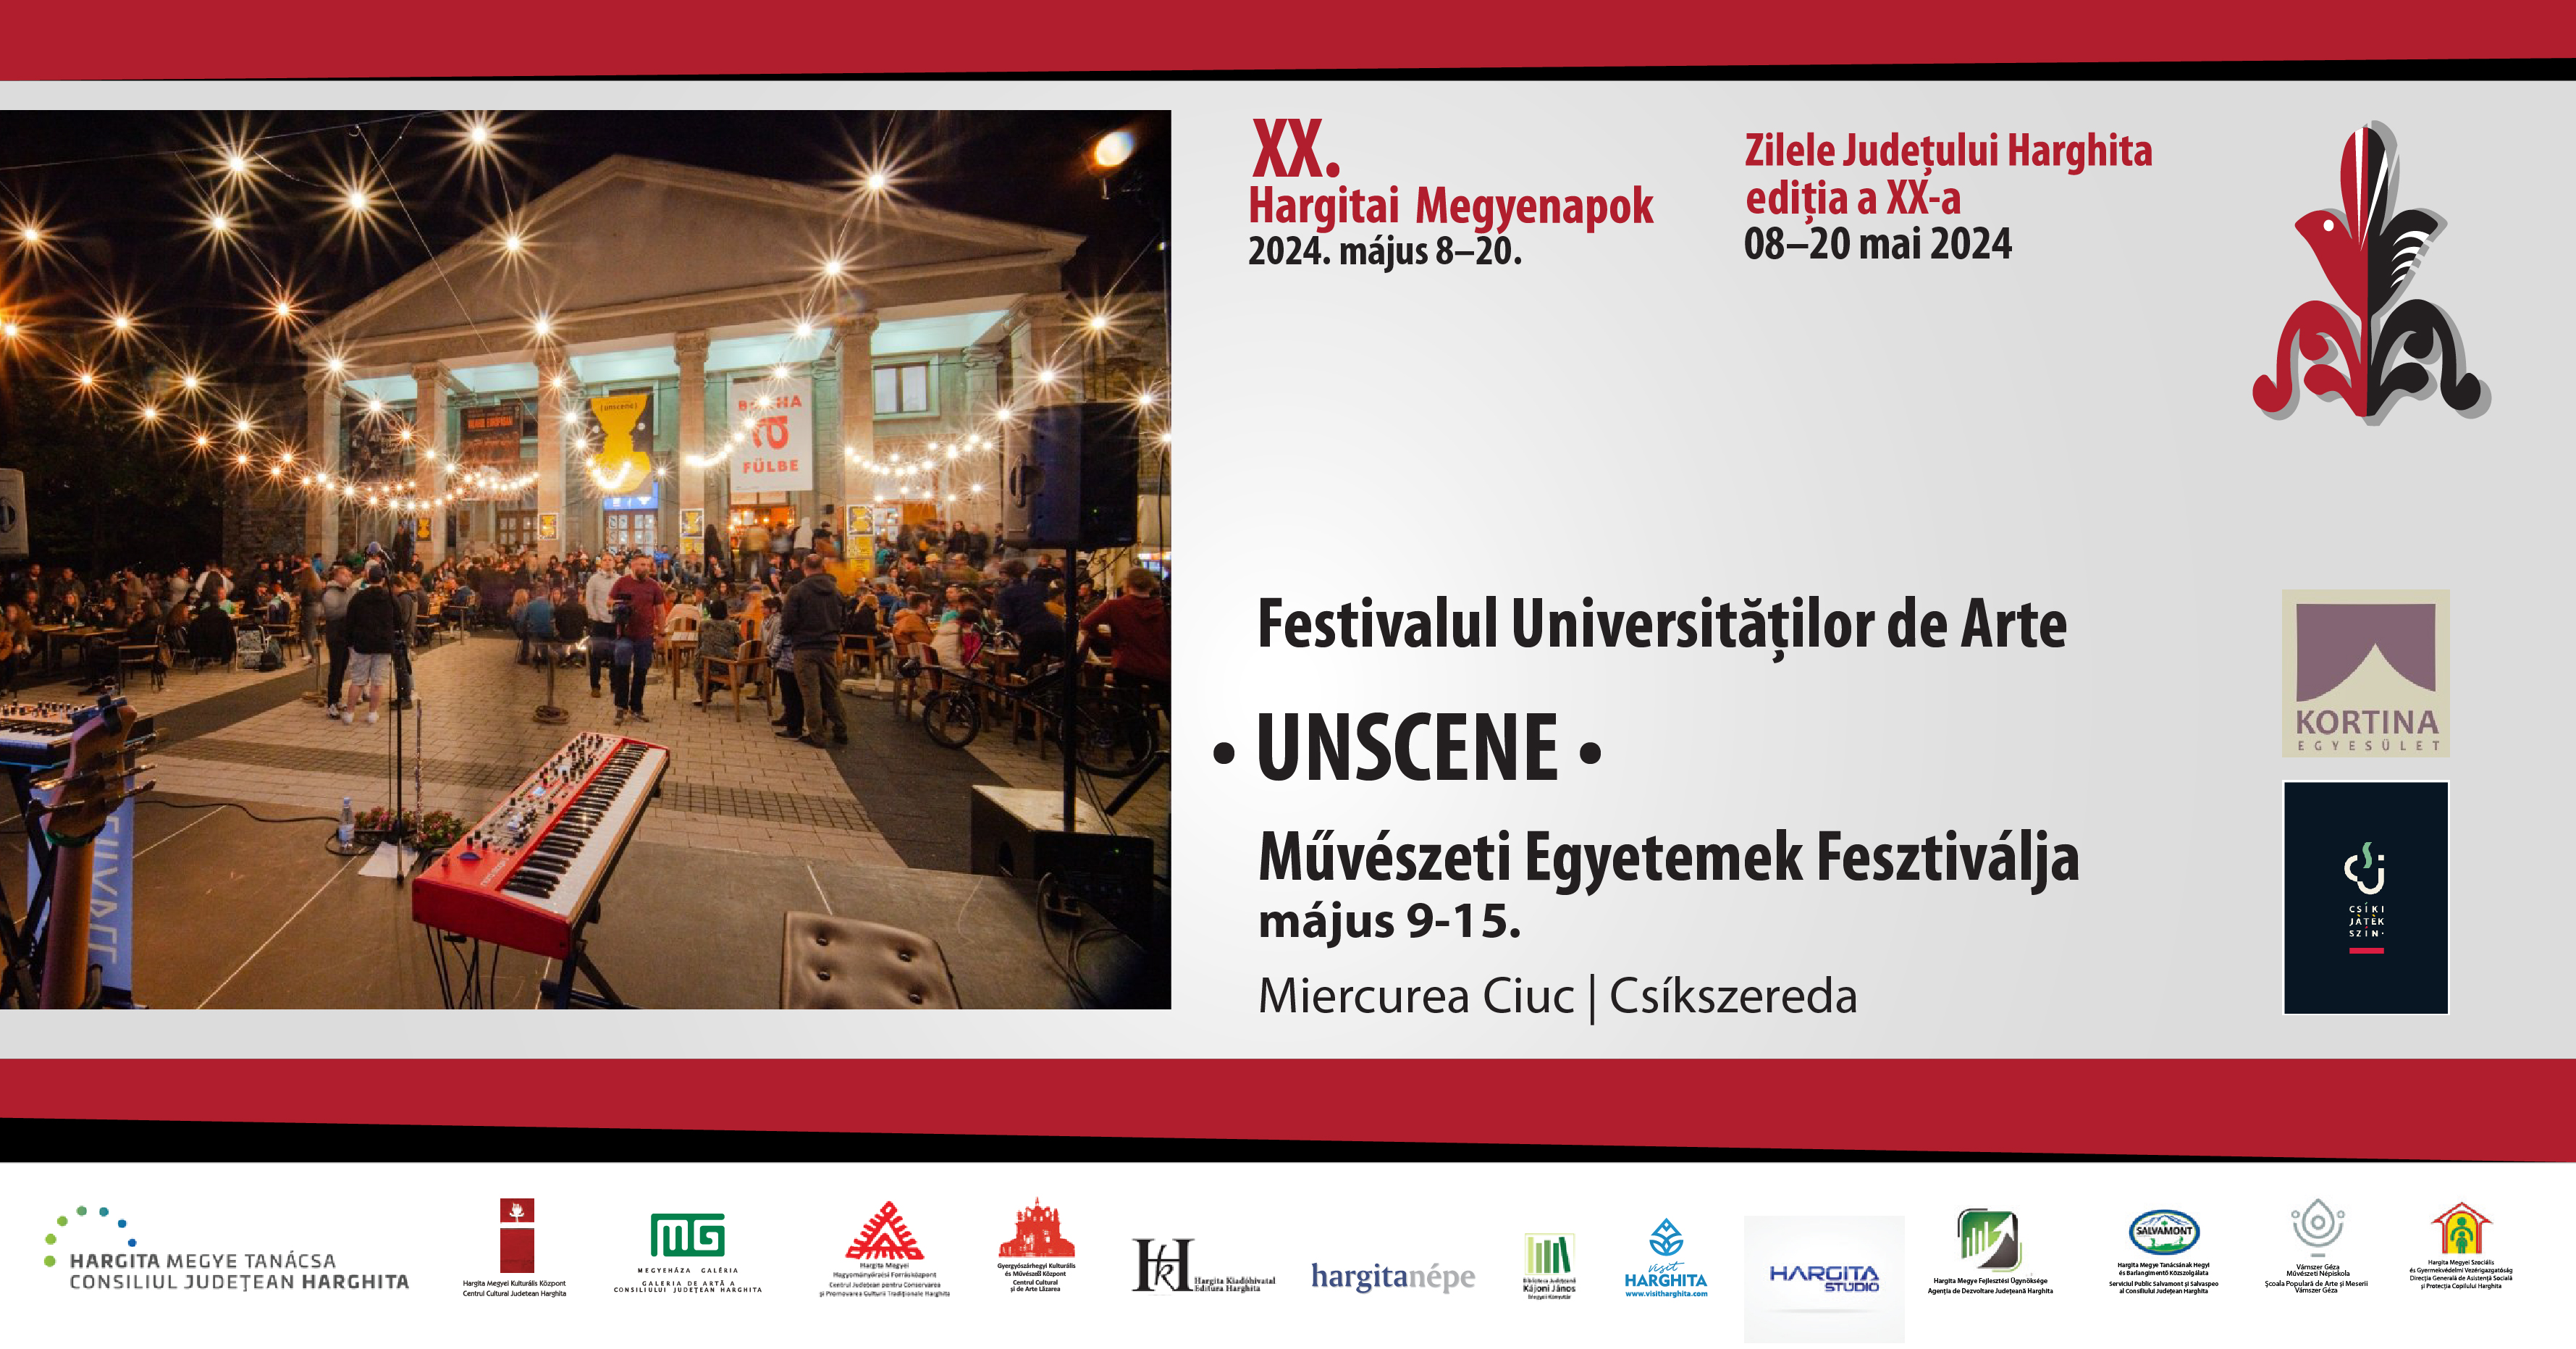 UNSCENE - Festival of Universities of Arts